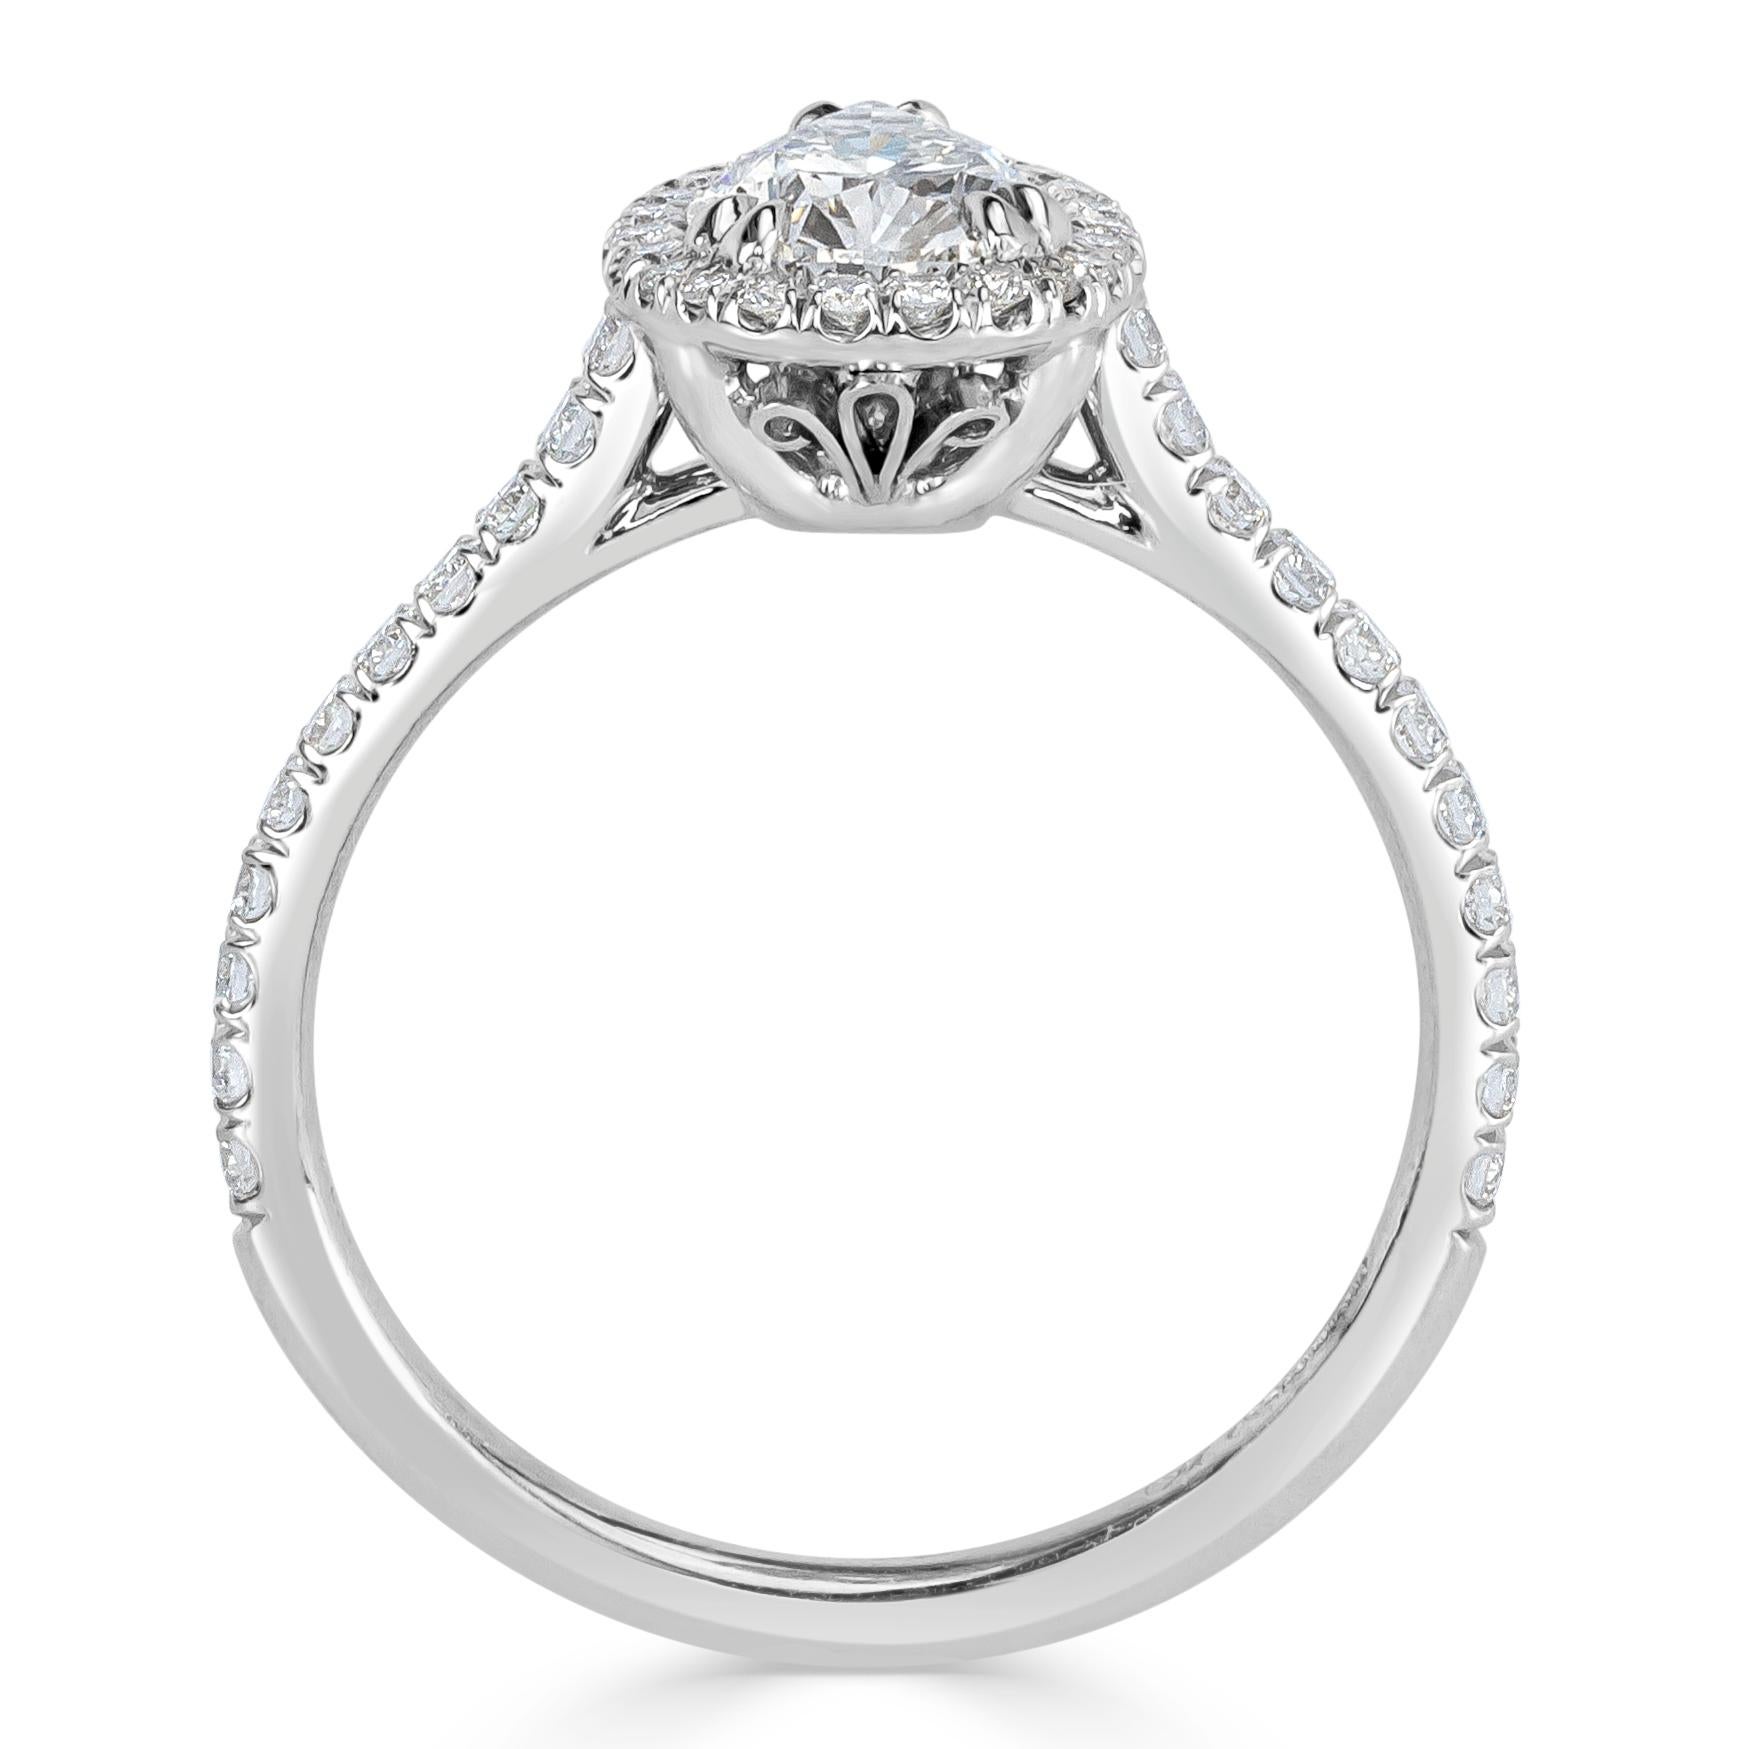 Women's or Men's Mark Broumand  1.43 Carat Pear Shaped Diamond Engagement Ring